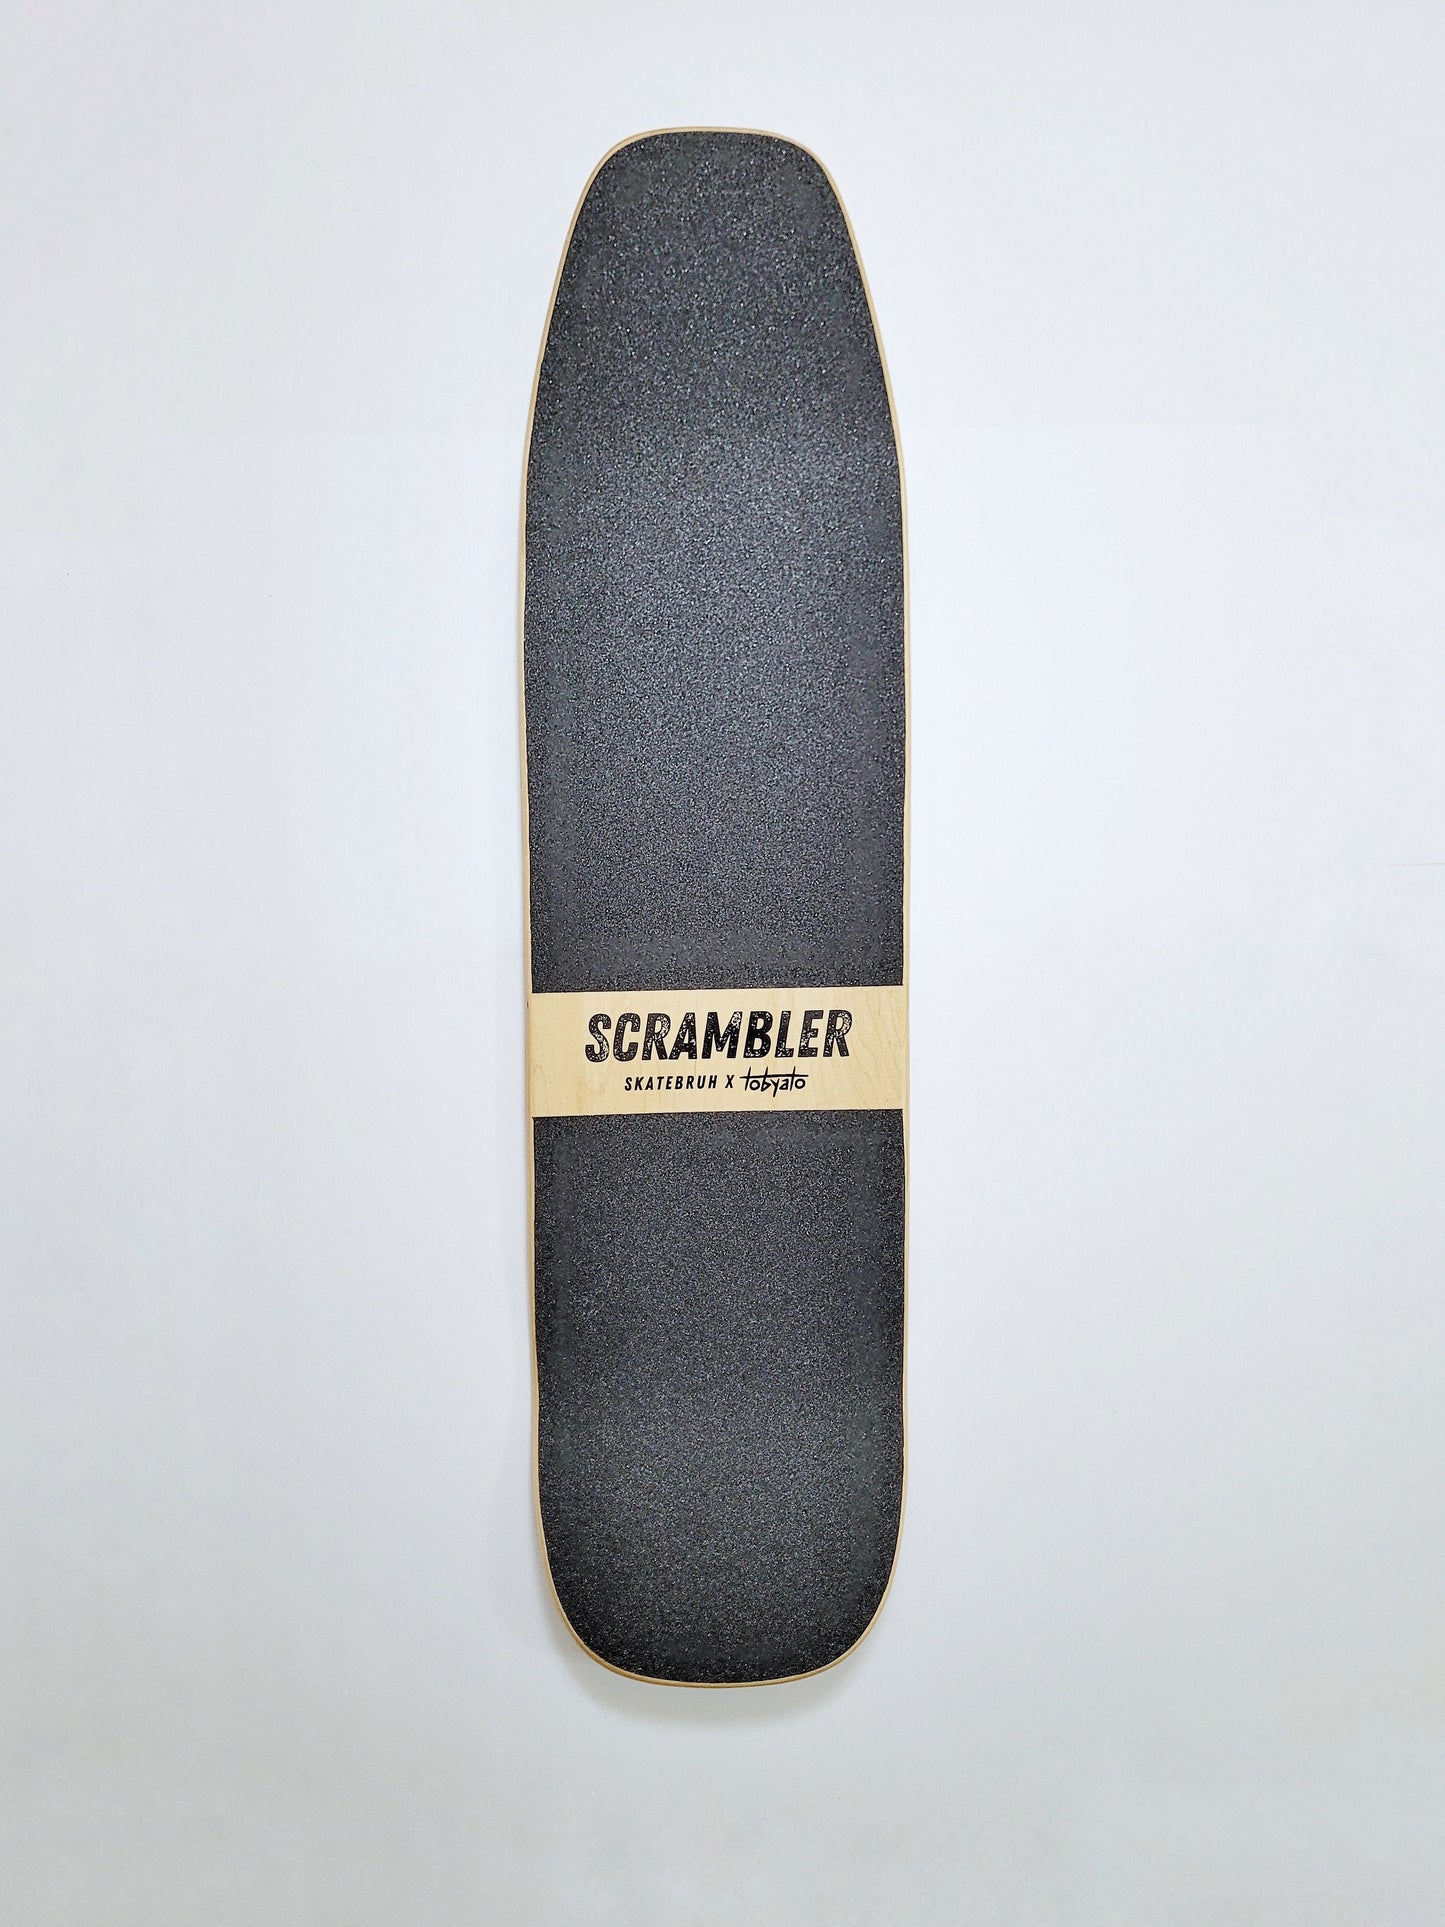 Skatebruh X Tobyato Scrambler deck - Custom Skateboard Builder - SkatebruhSG